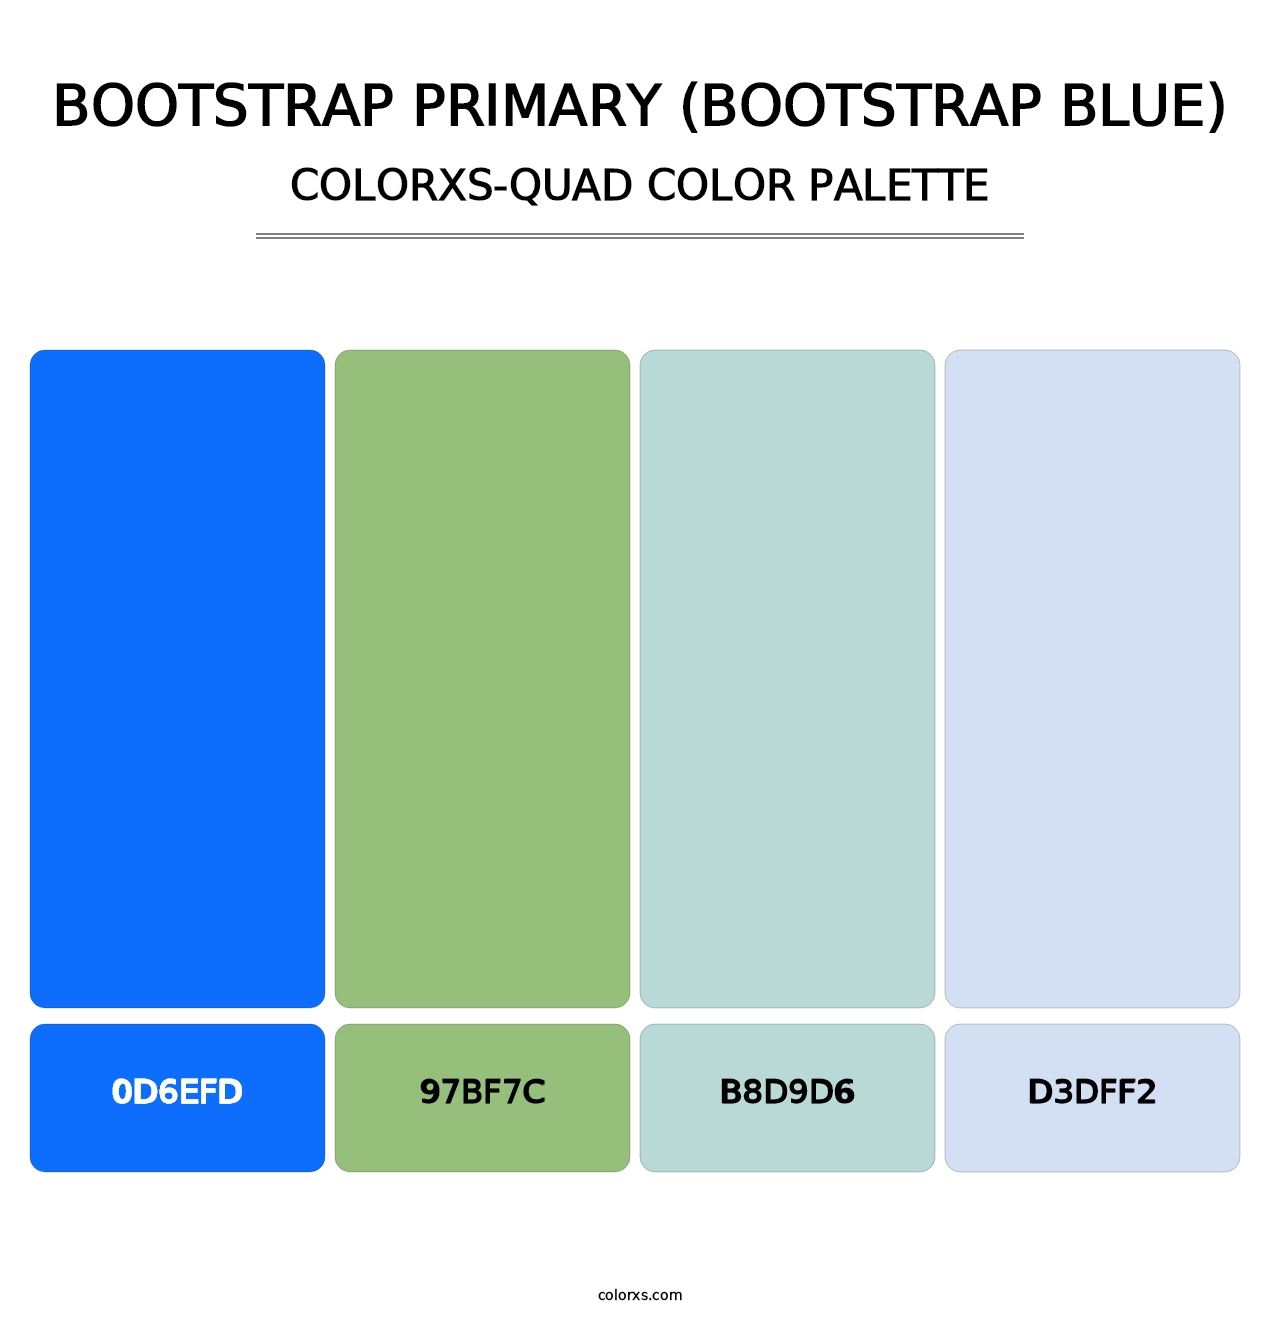 Bootstrap Primary (Bootstrap Blue) - Colorxs Quad Palette